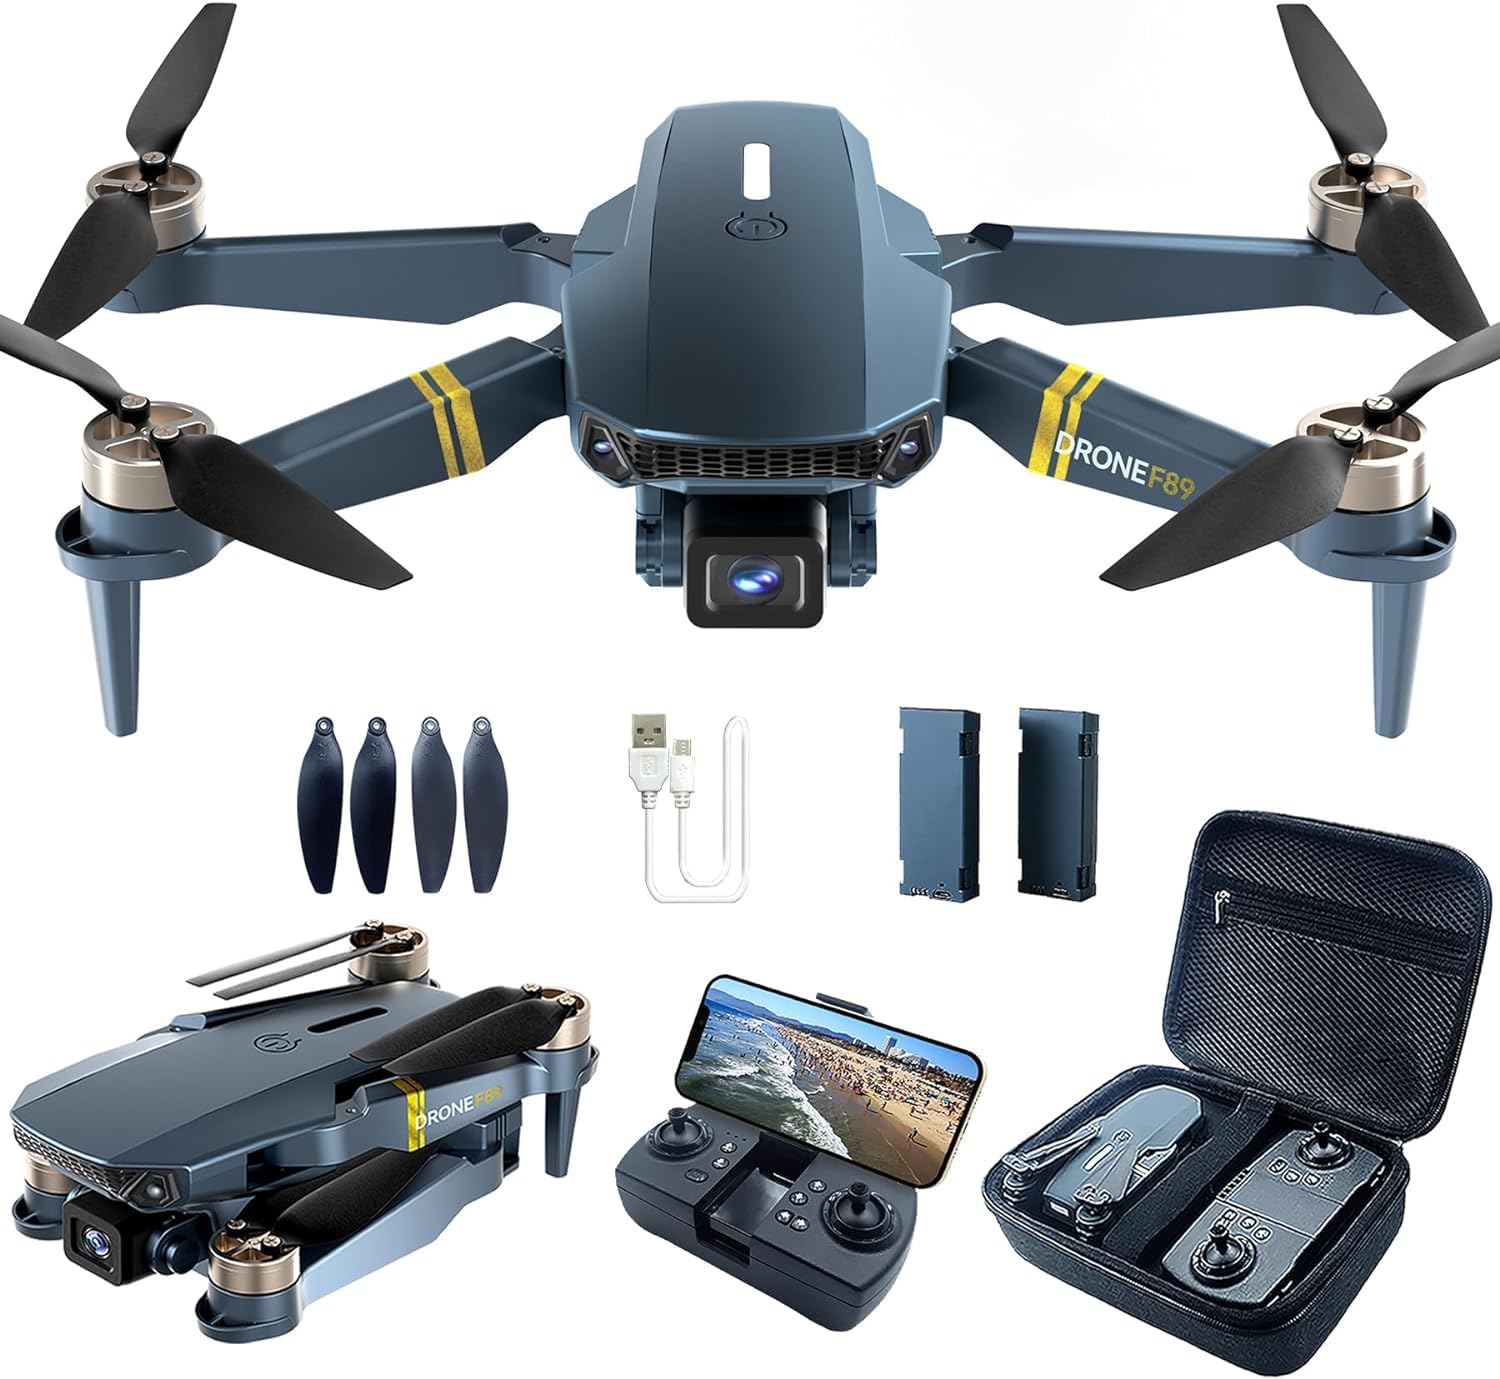 Brushless Super Ausdauer Faltbare Quadcopter Drohne für Anfänger – 40+ Minuten Flugzeit, Wi-Fi FPV Drohne mit 120°Weitwinkel 1080P HD Kamera, Follow Me, Duale Kameras